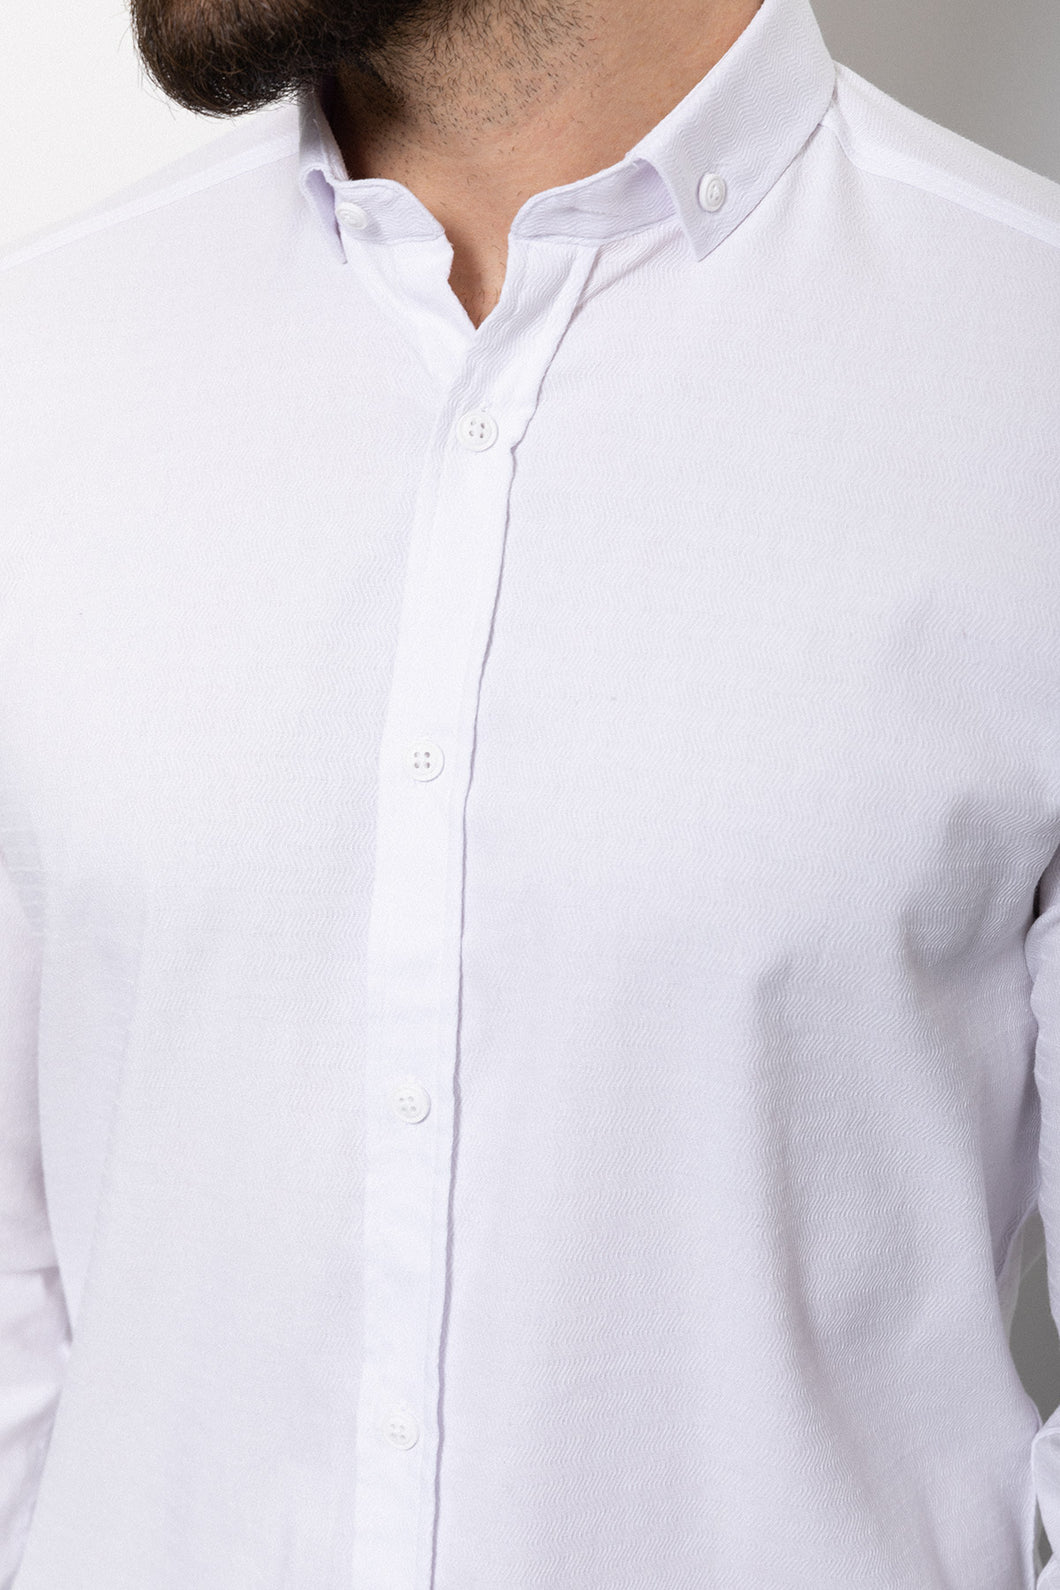 37594 : Long Sleeve Shirt: White